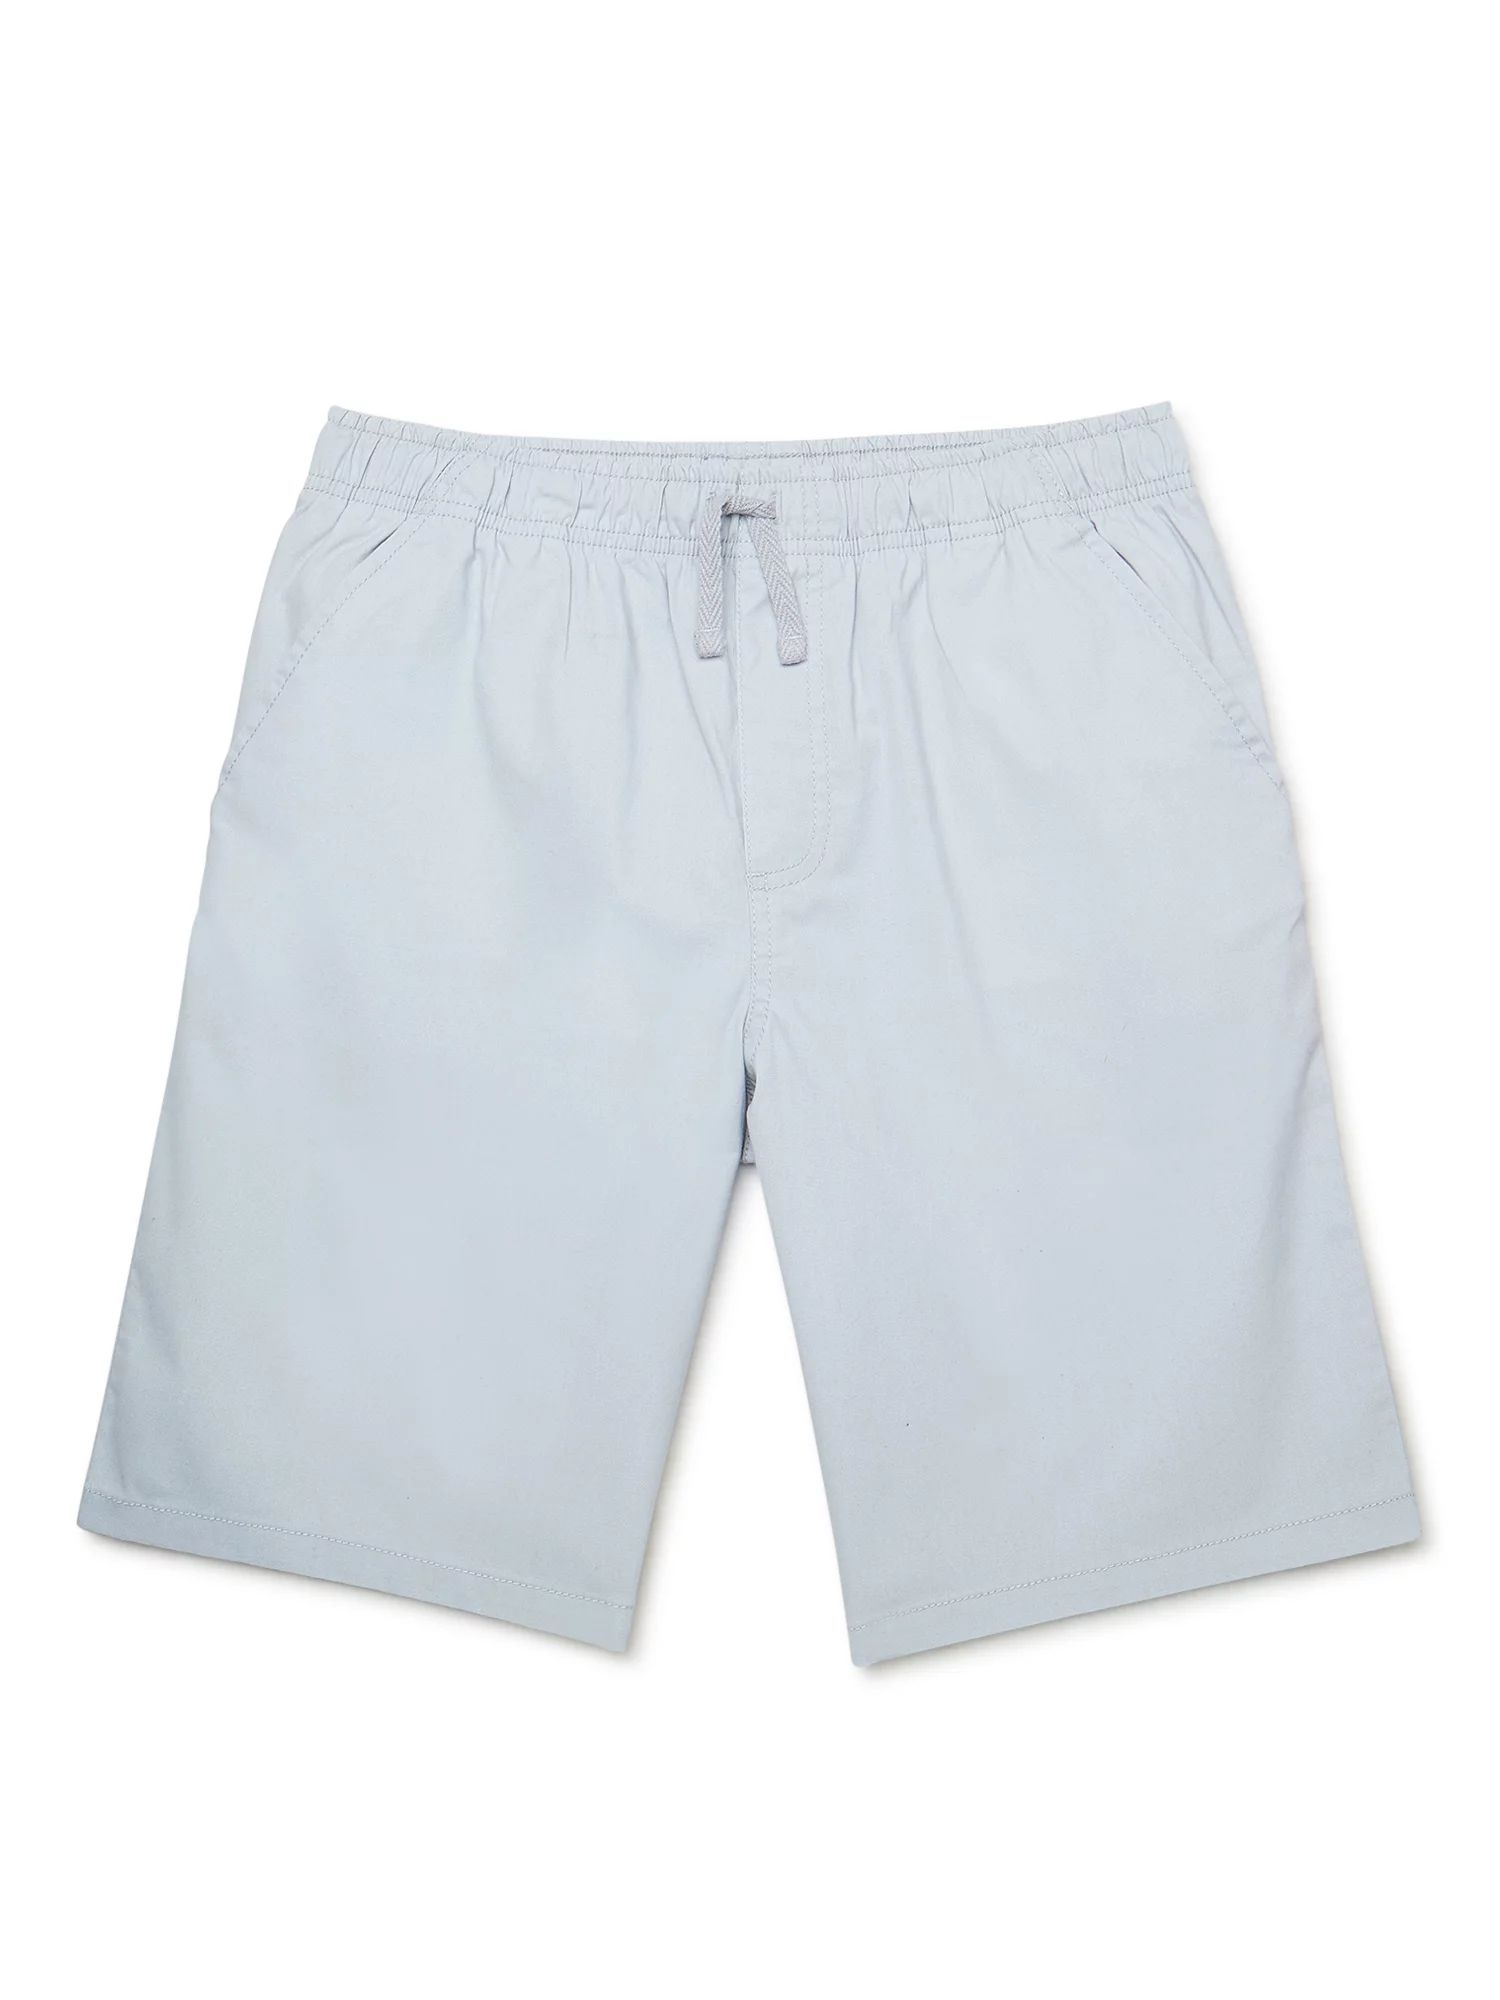 Wonder Nation Boys Pull On Shorts, Sizes 4-18 & Husky | Walmart (US)